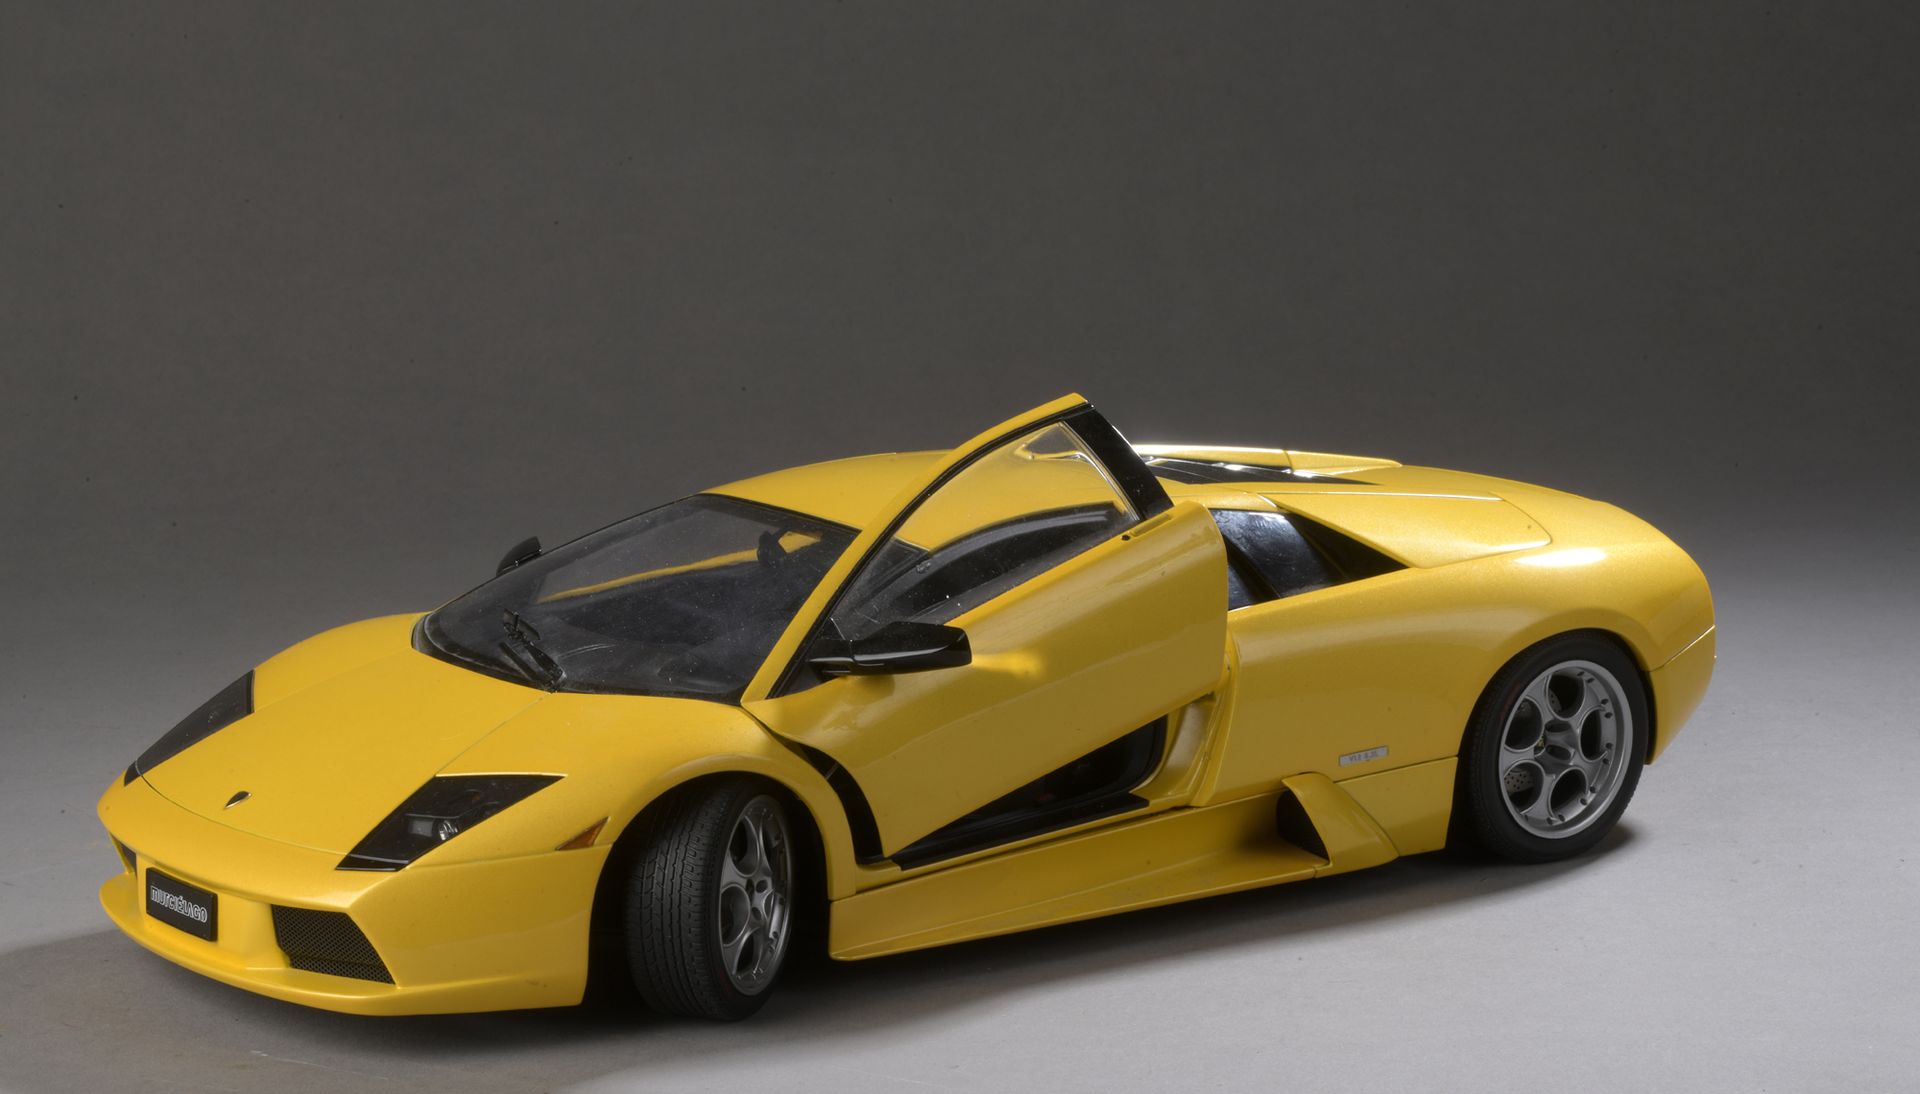 Null AUTO ART - MODELE REDUIT de LAMBORGHINI MURCIELAGO de couleur jaune. 

L’hi&hellip;